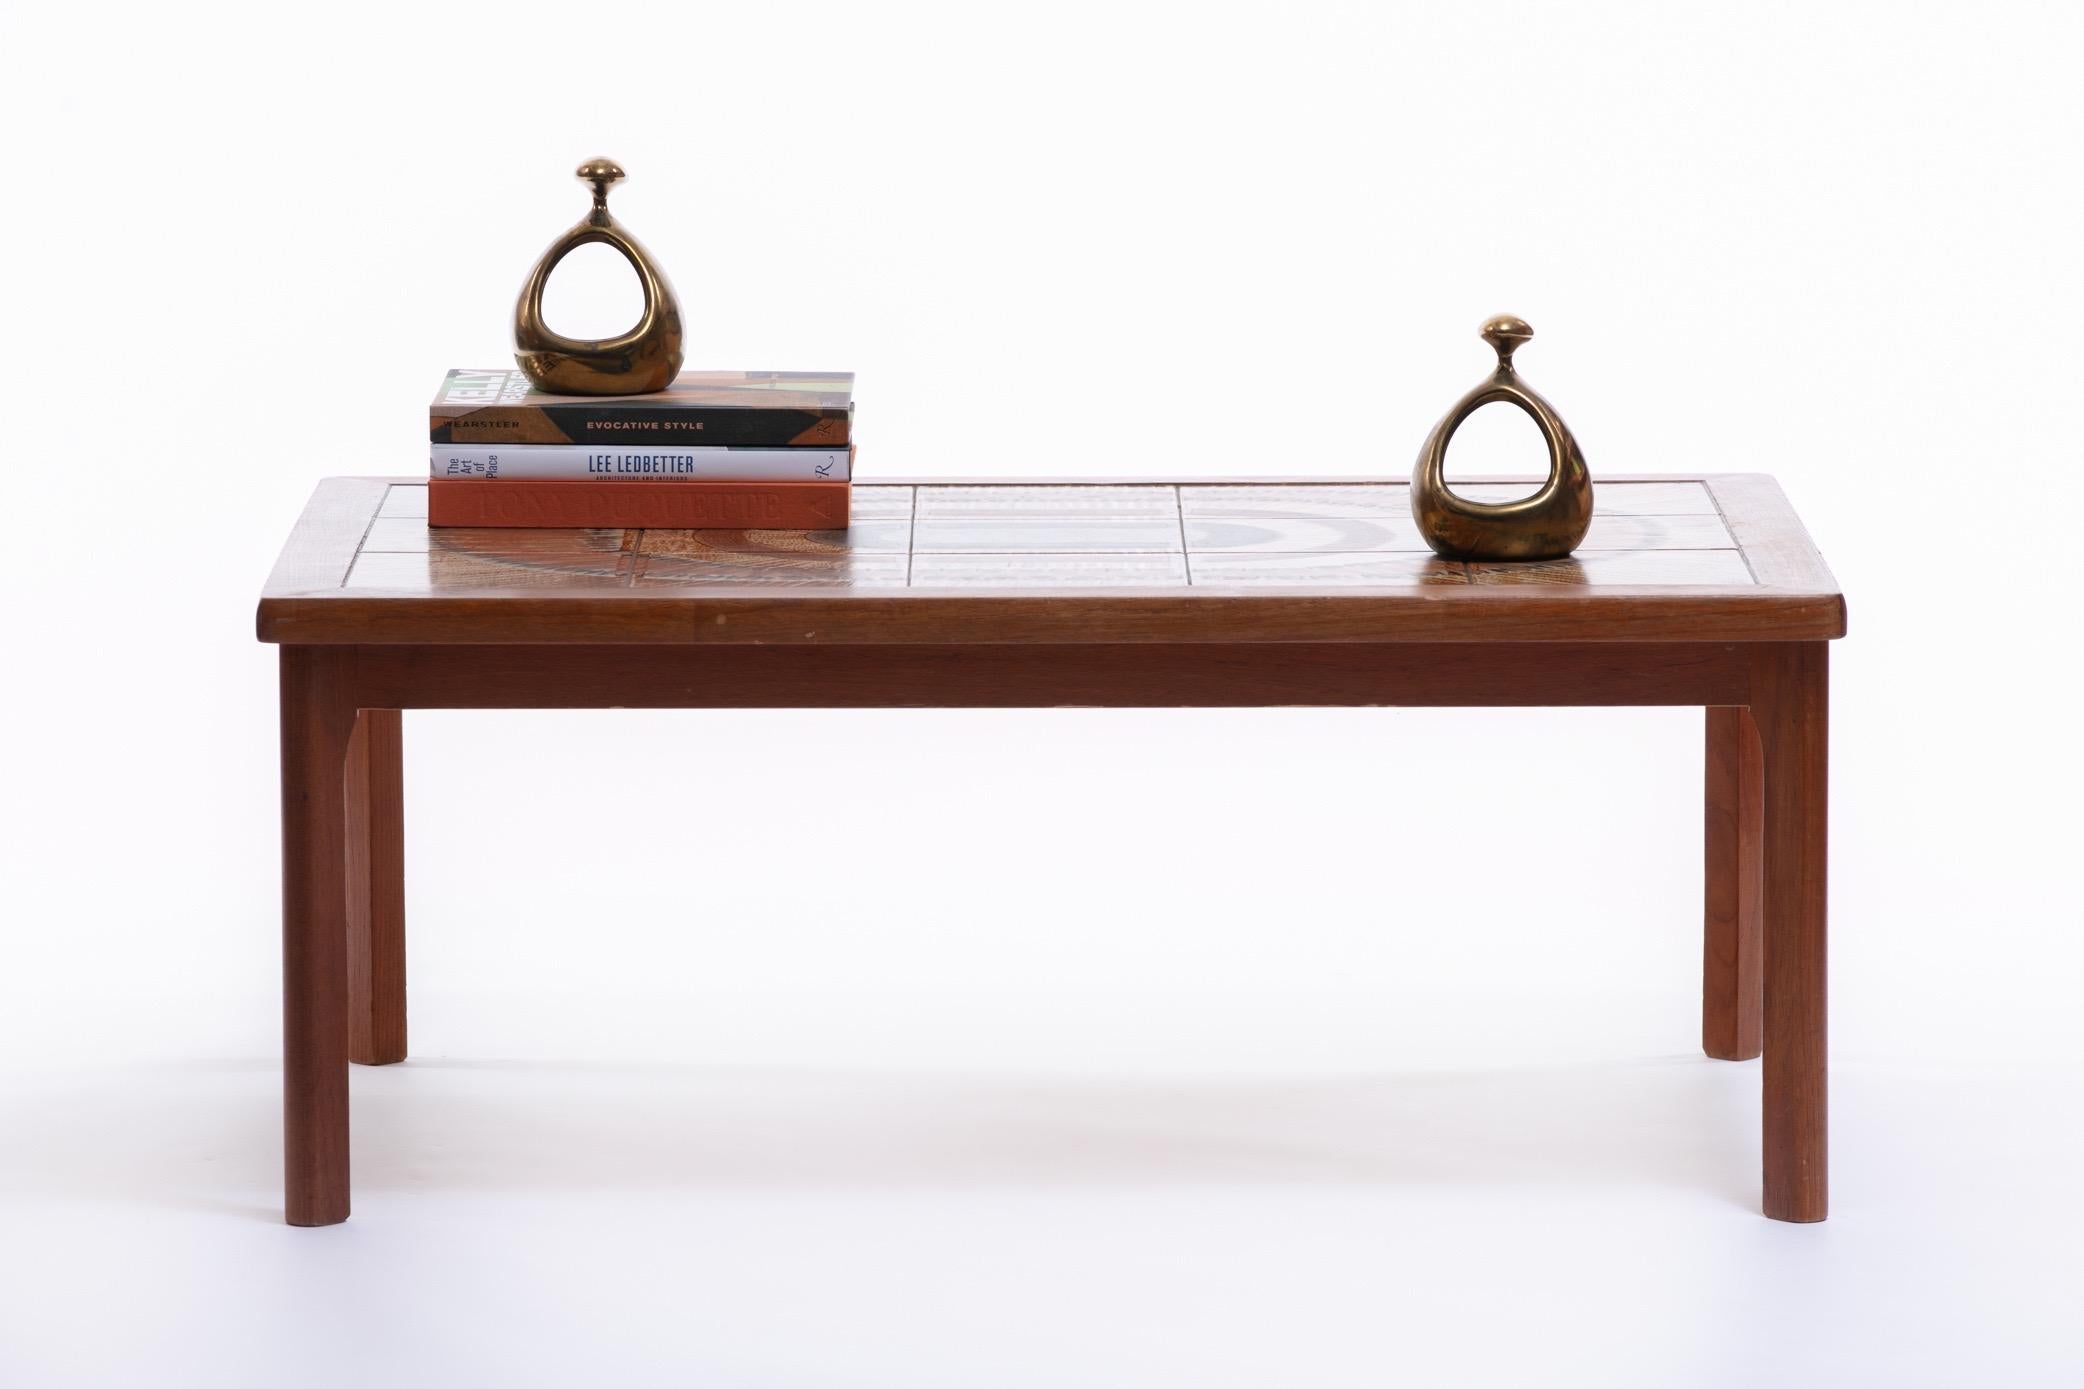 Mid-20th Century Danish Modern Teak and Painted Ceramic Tile Coffee Table by Toften Mobelfabrik